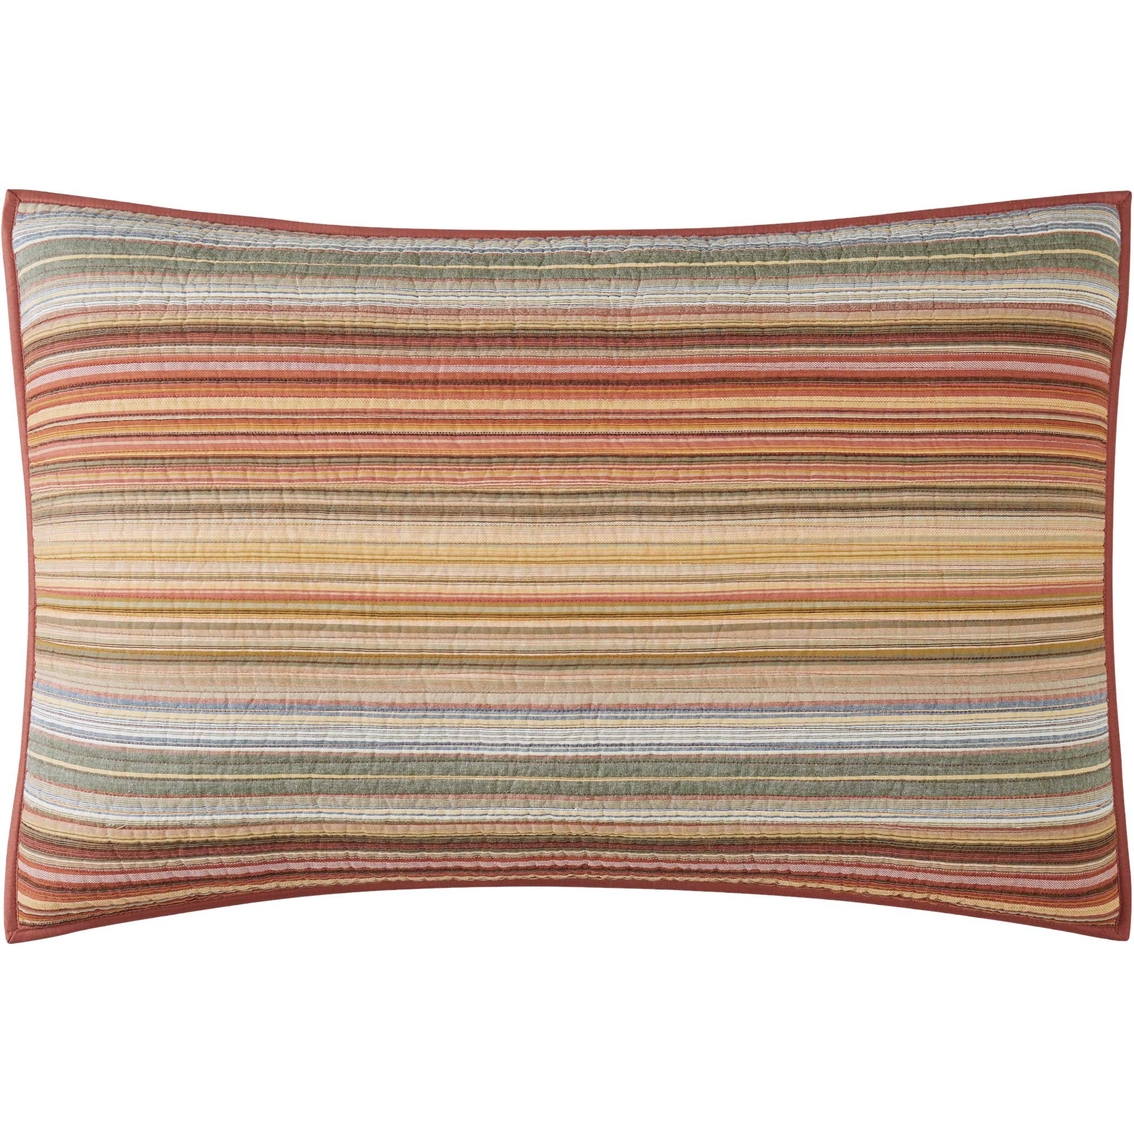 Brooklyn Loom Sunset Stripe Yarn Dye Quilt Set - Image 4 of 4